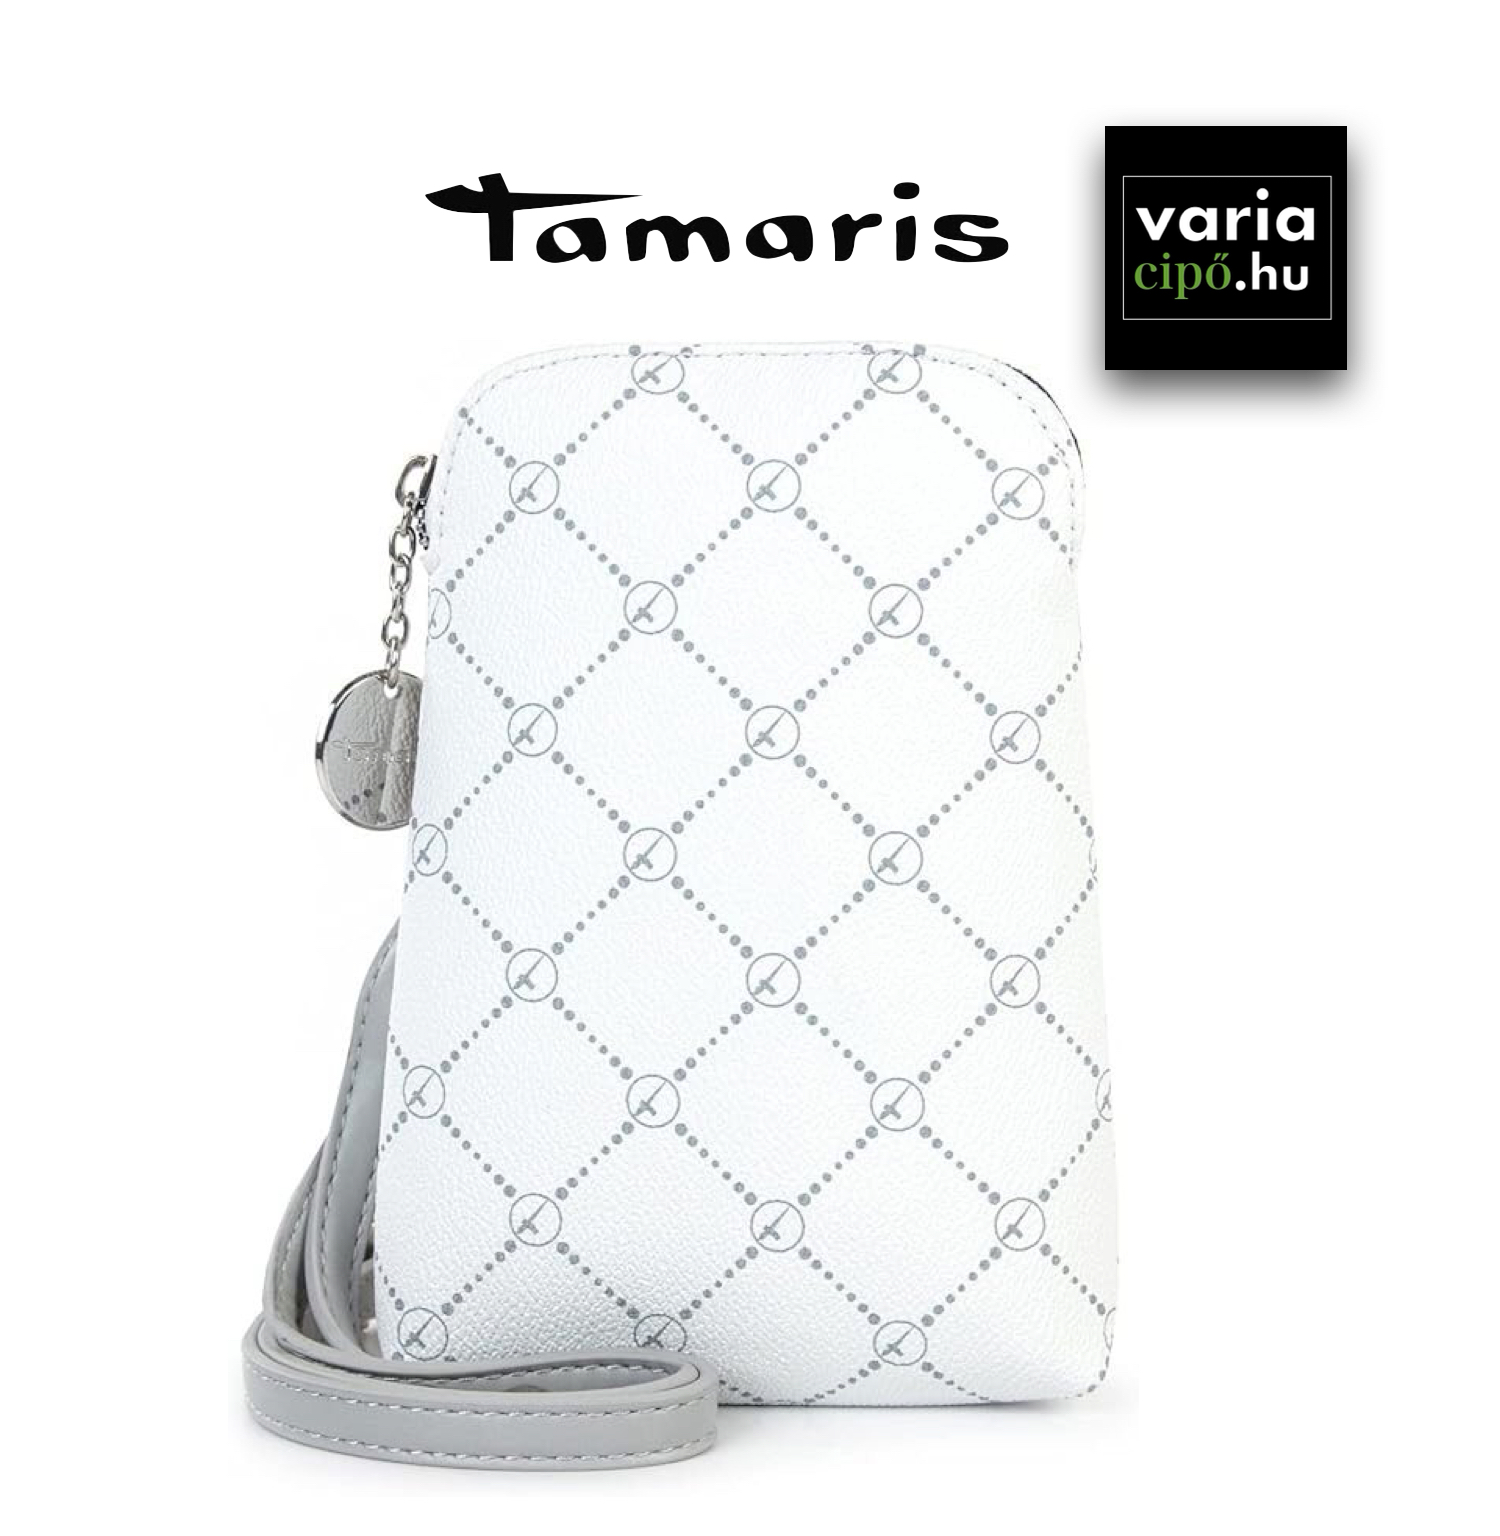 Tamaris kis crossbody fehér, 31170-303 white